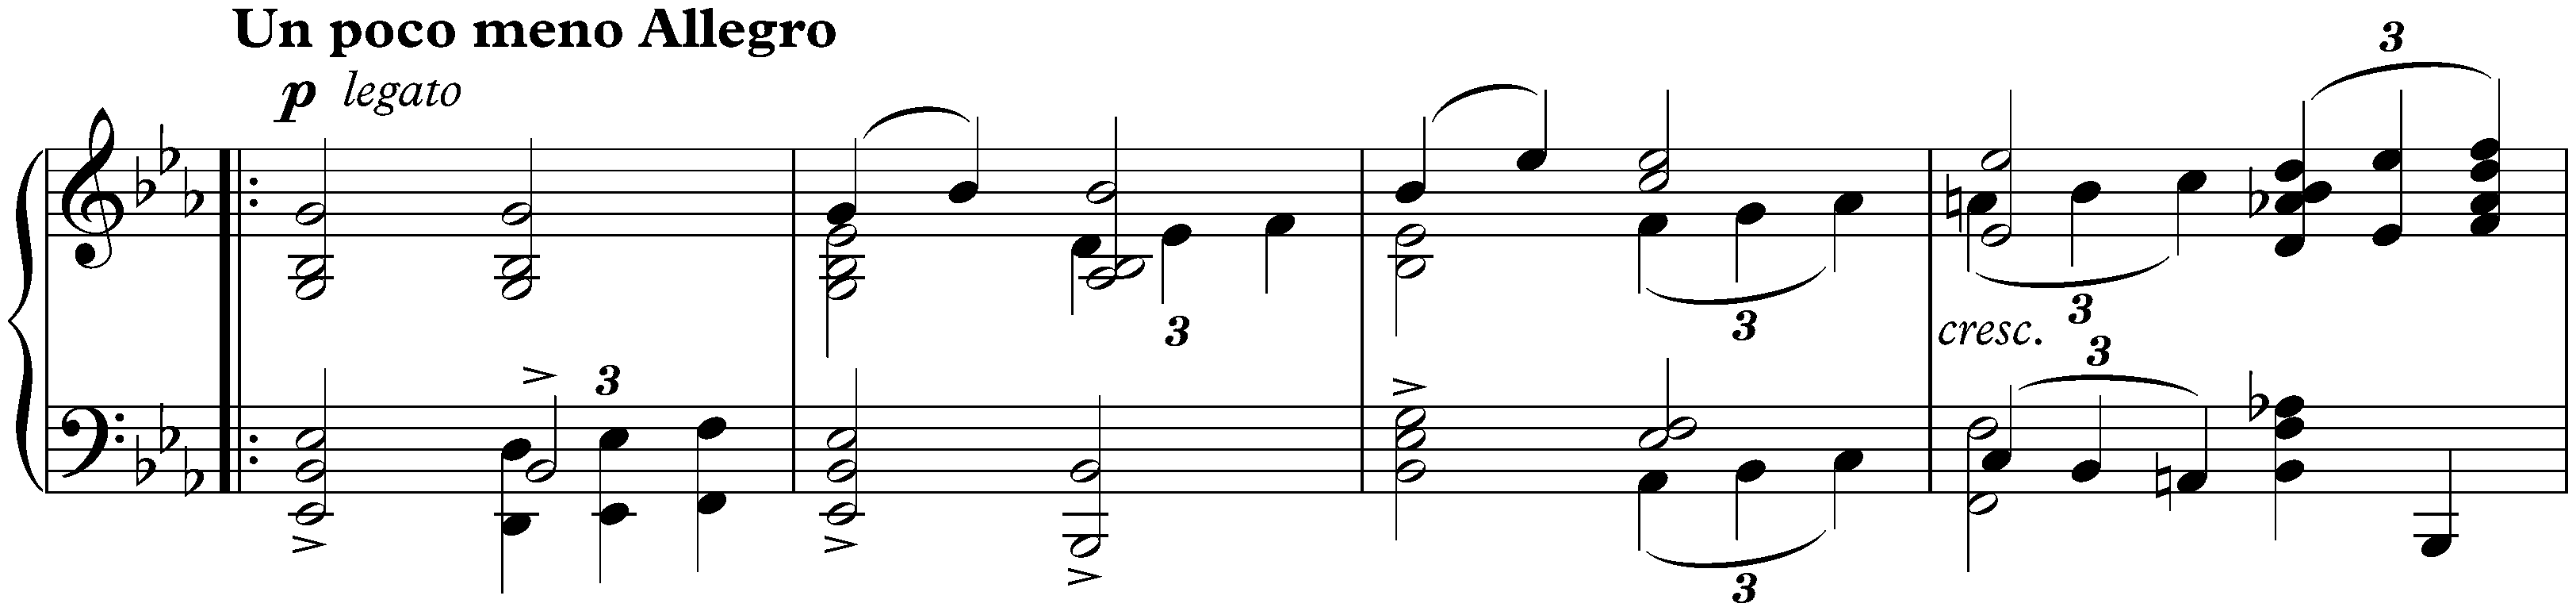 Seven Fantasies, op. 116; 3. Capriccio in G minor